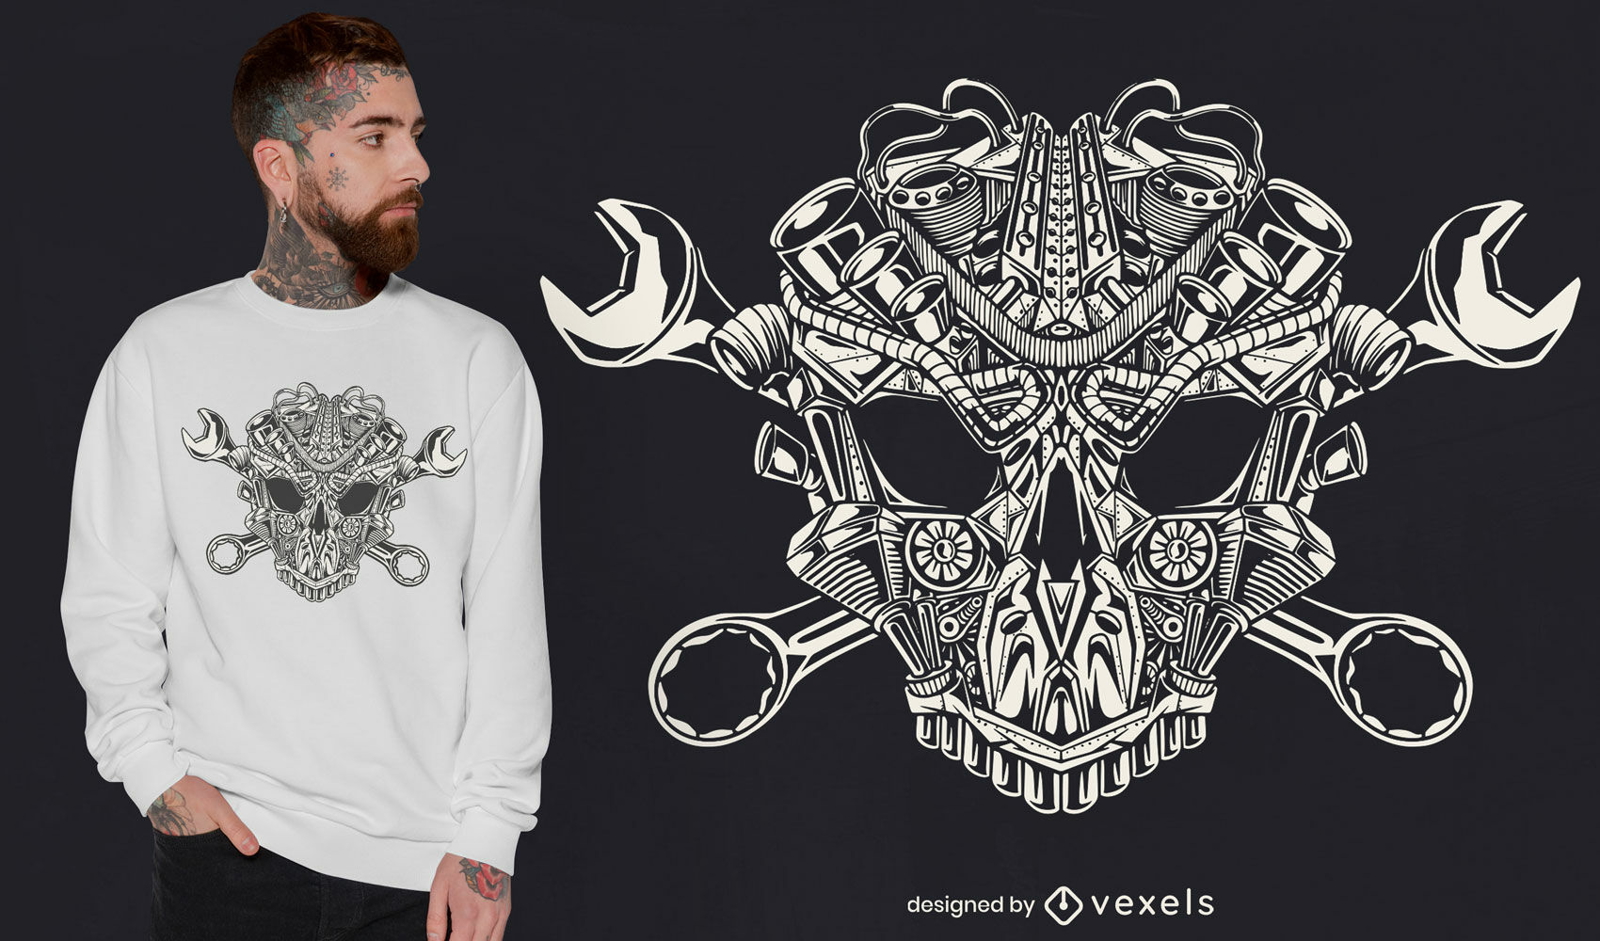 Grunge tools skull t-shirt design